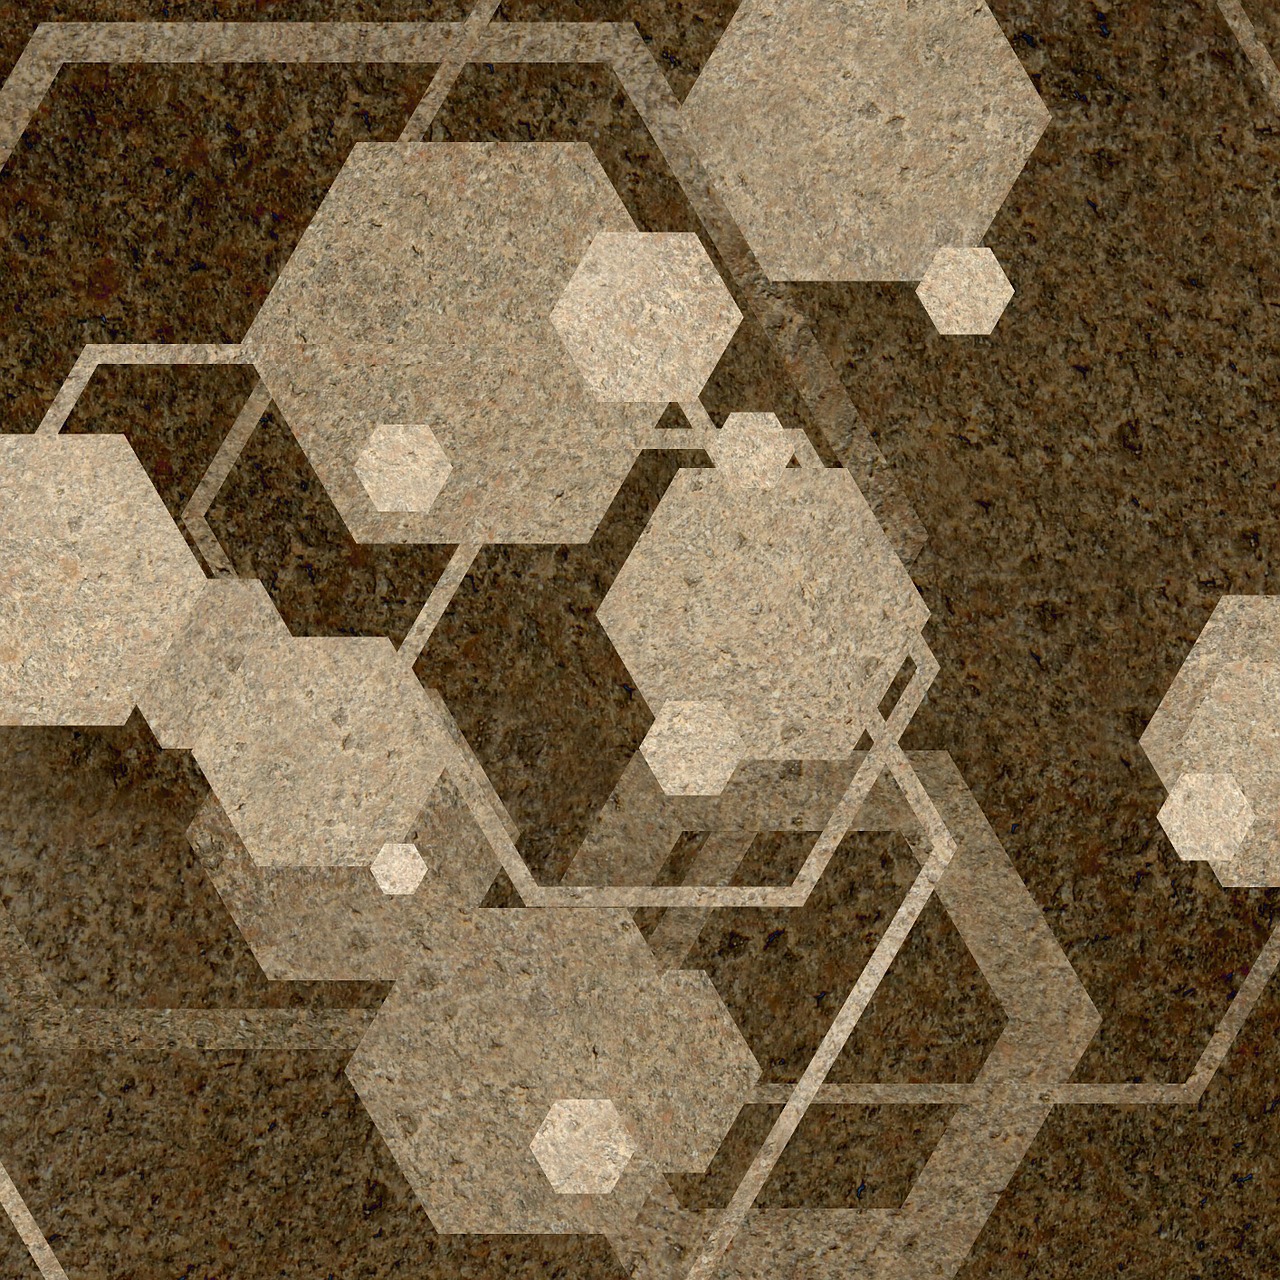 hexagon fragment background image free photo